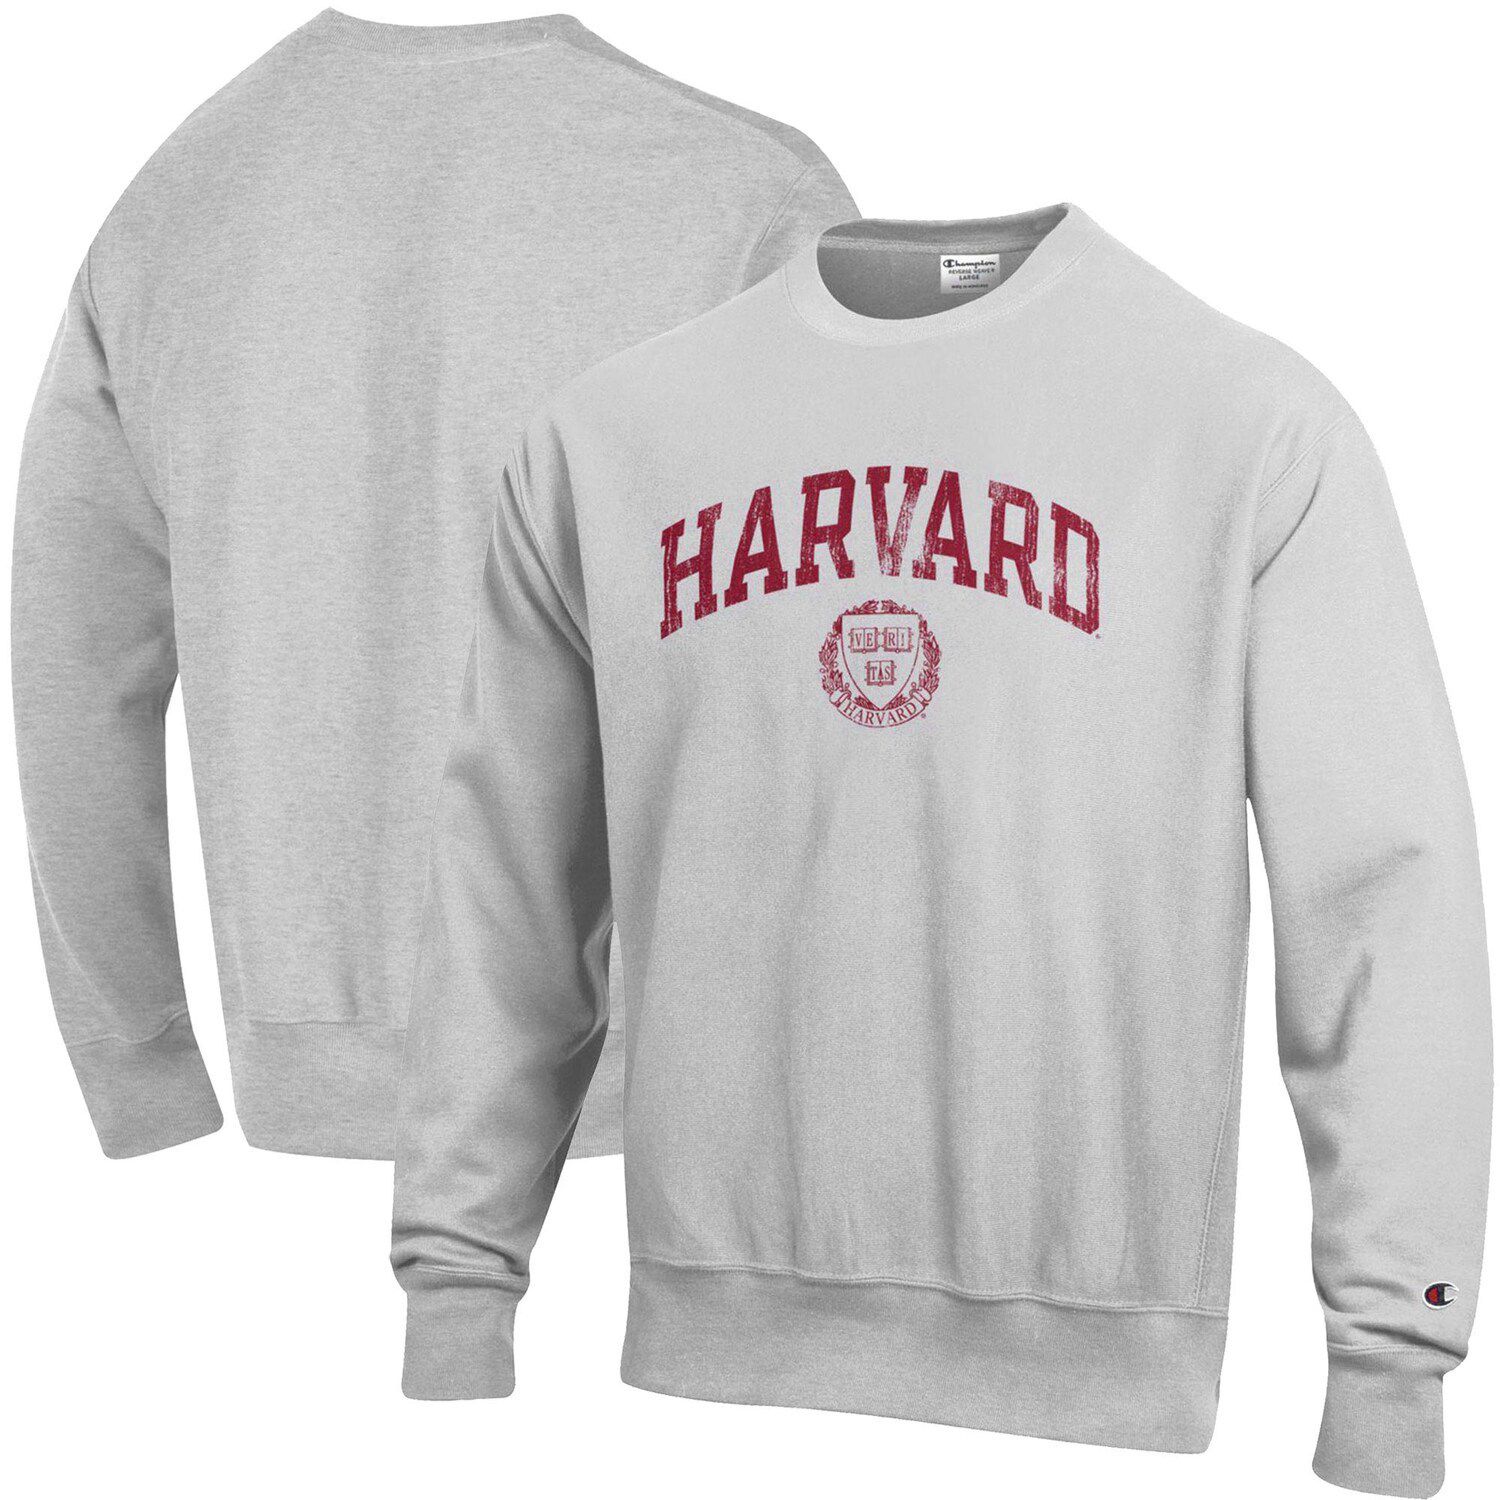 harvard champion sweater